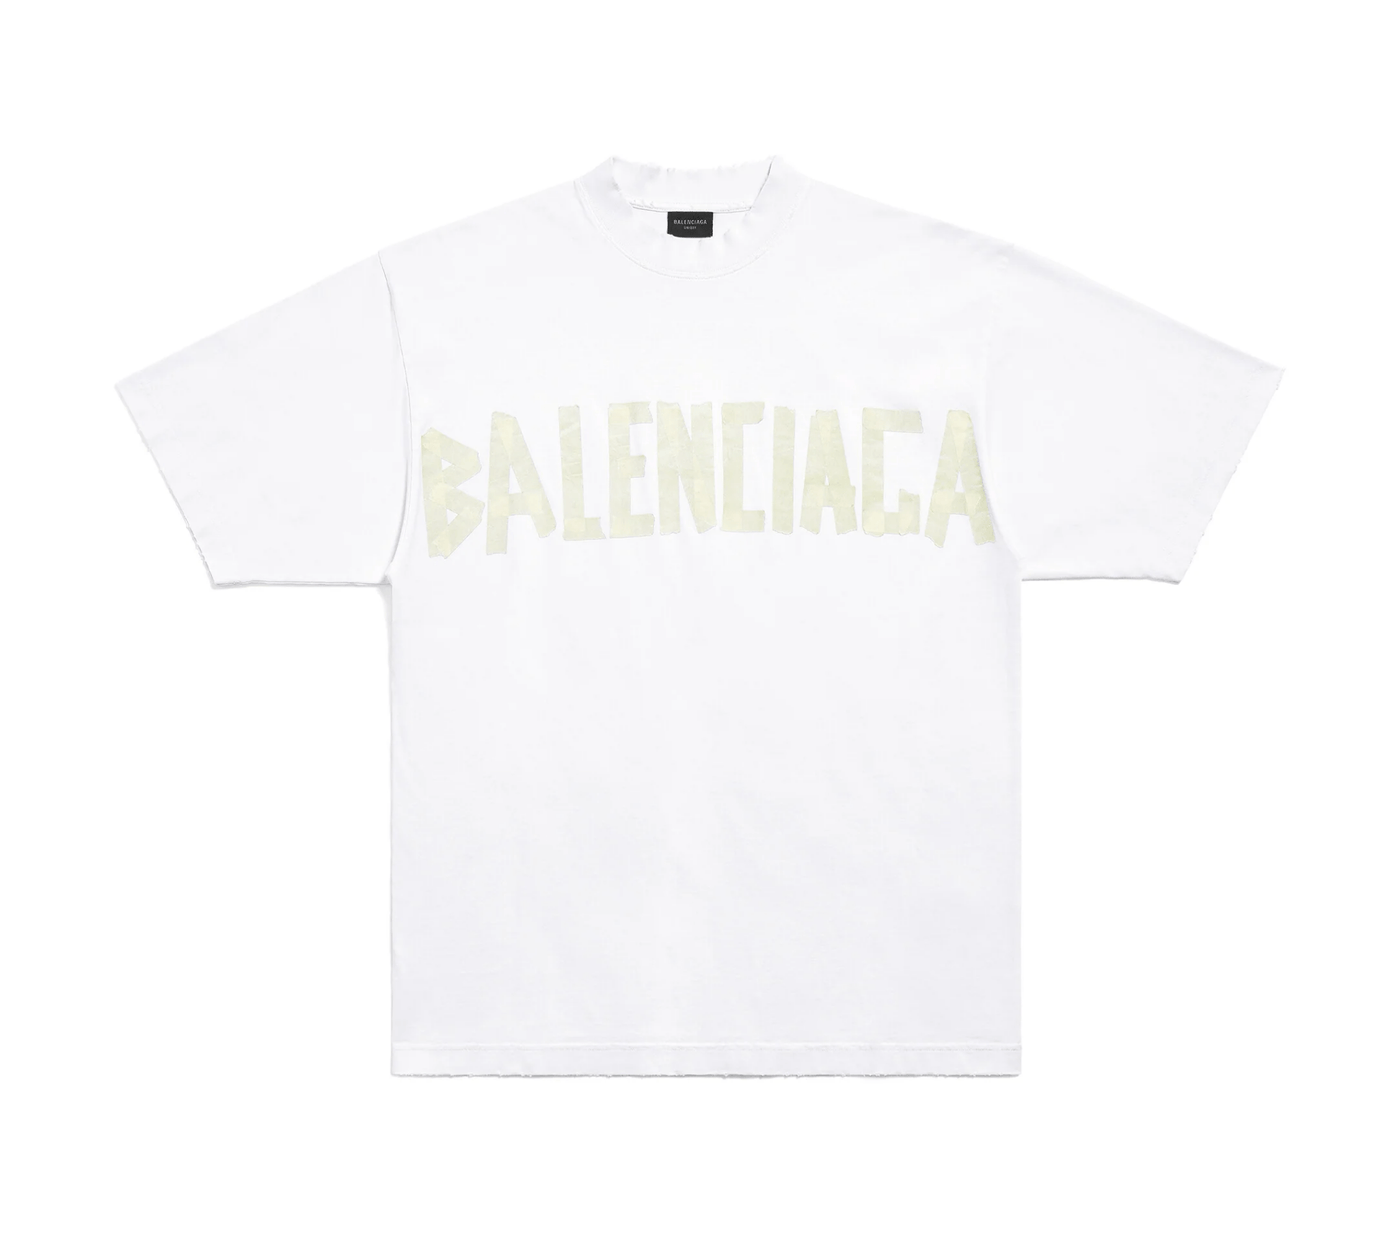 Balenciaga T-shirt Tape Type - Lothaire